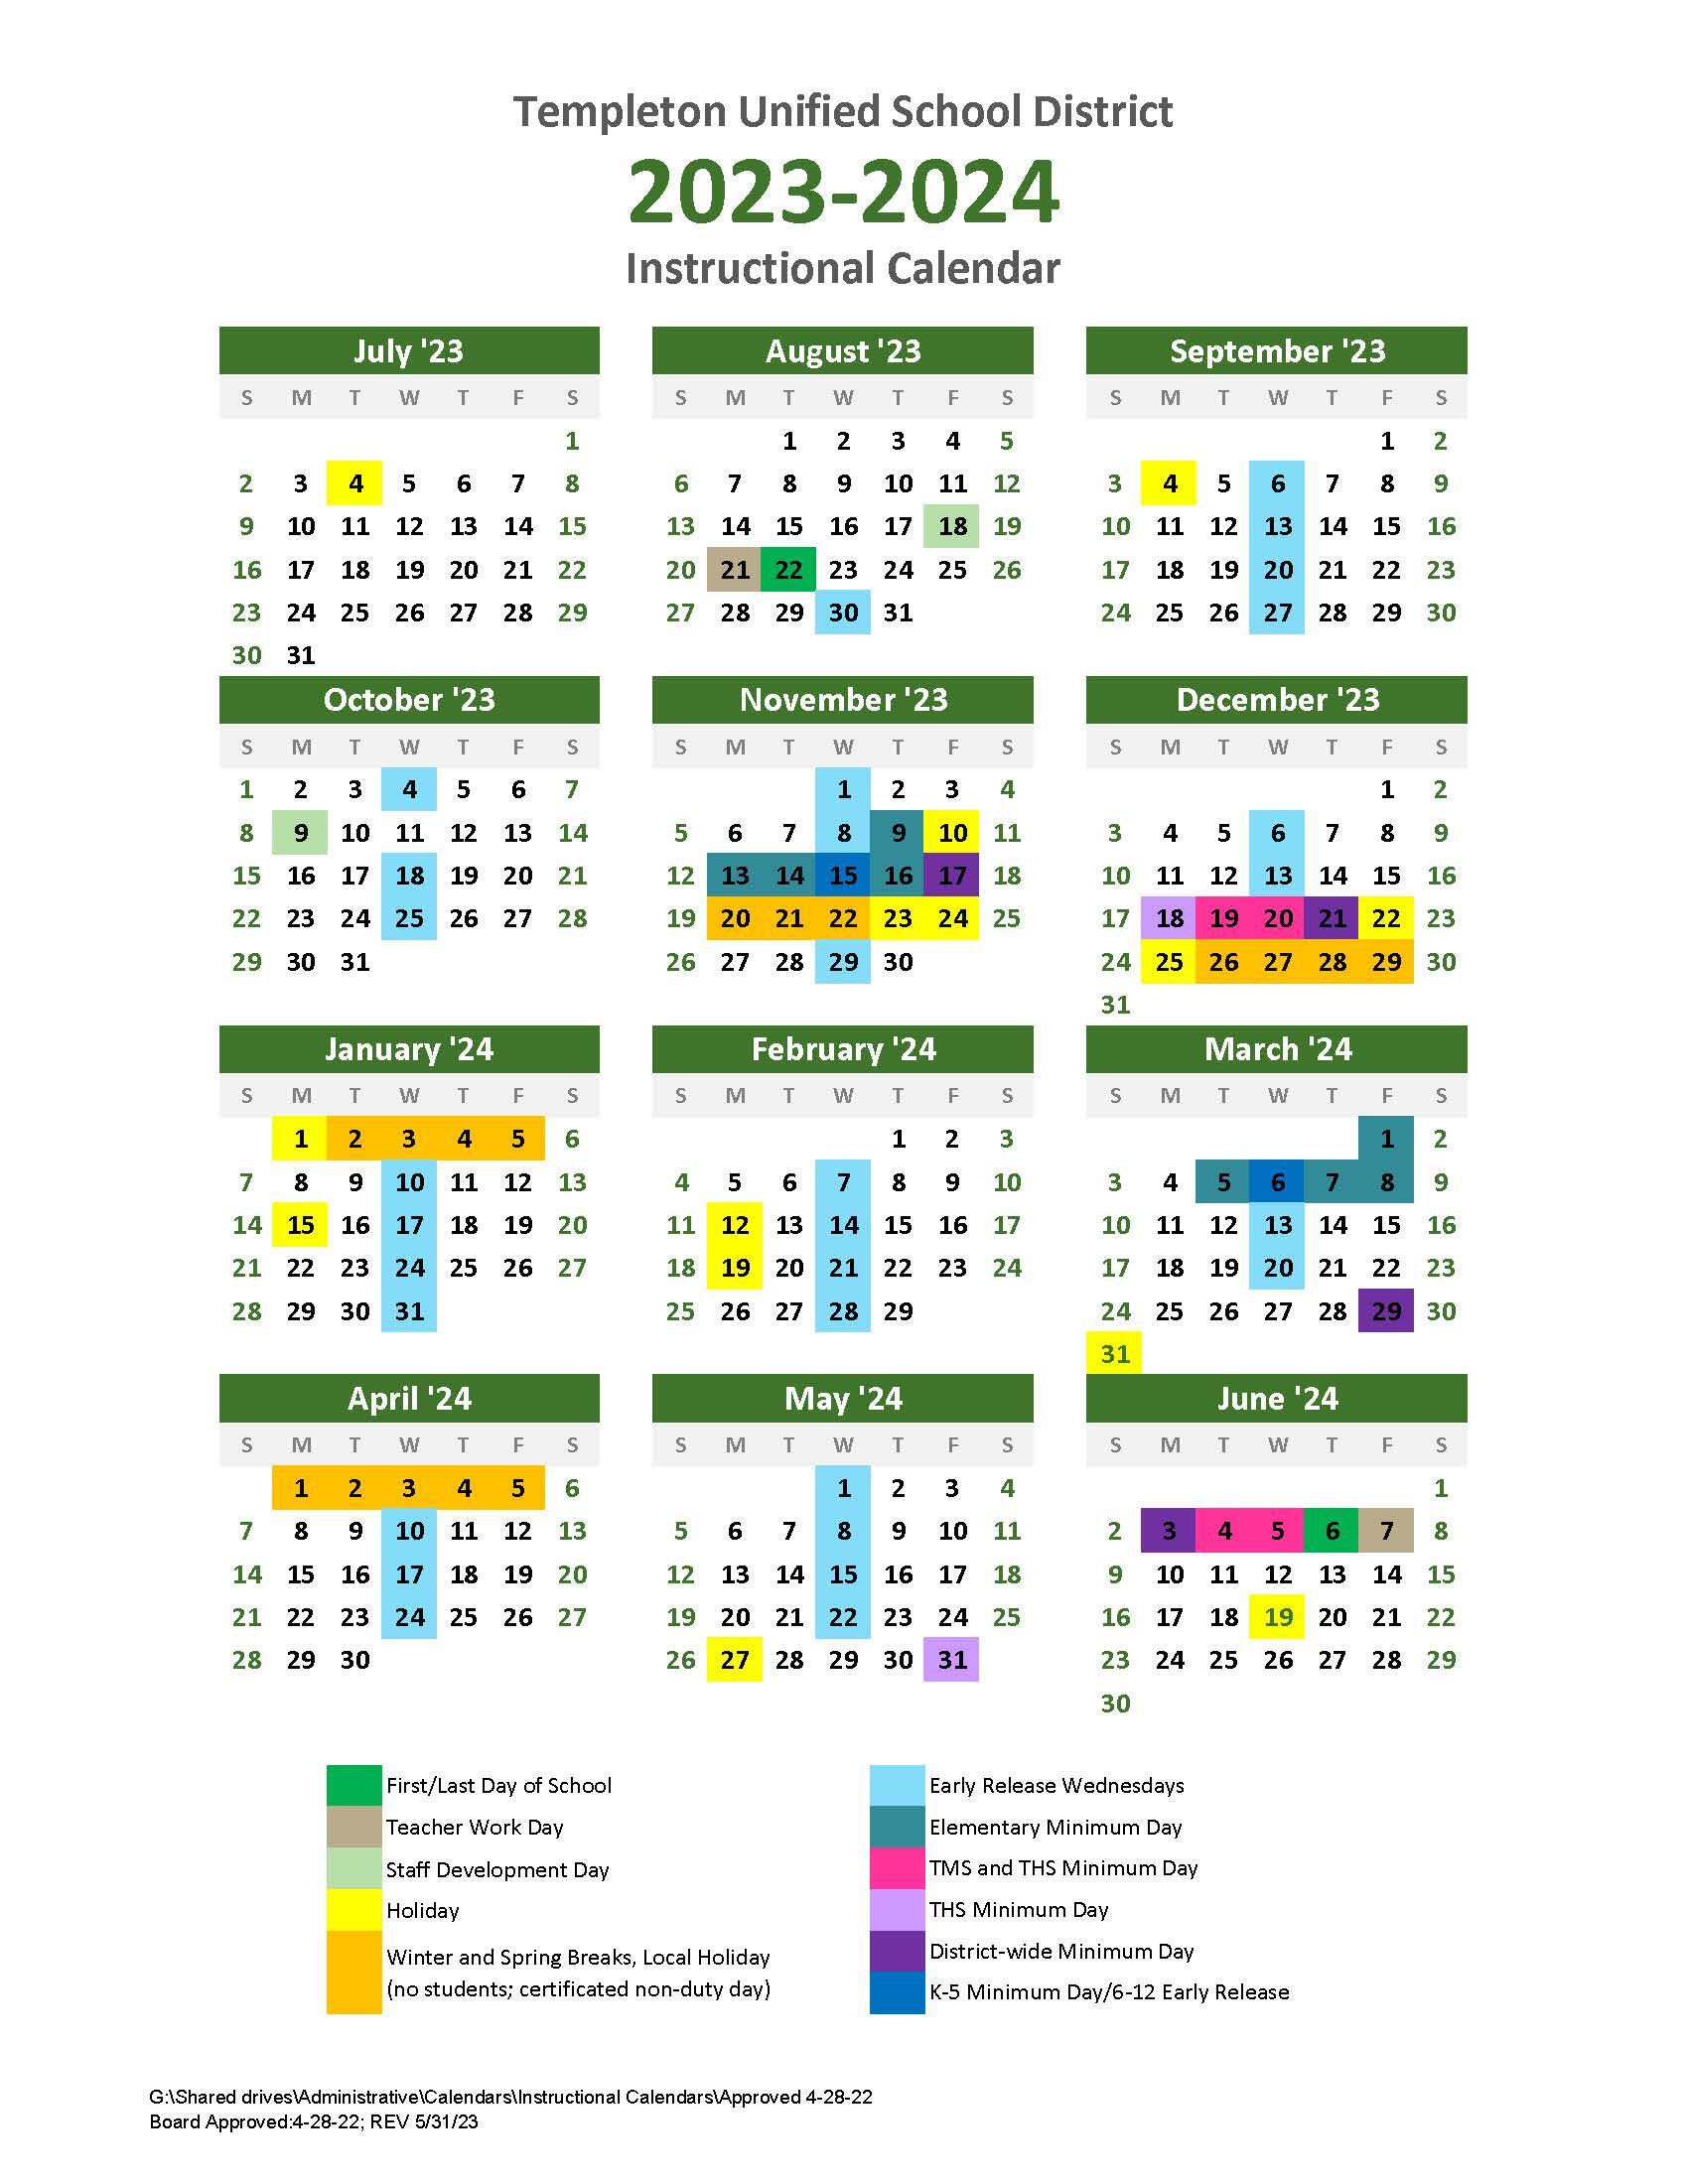 2023-2024 TUSD Instructional Calendar